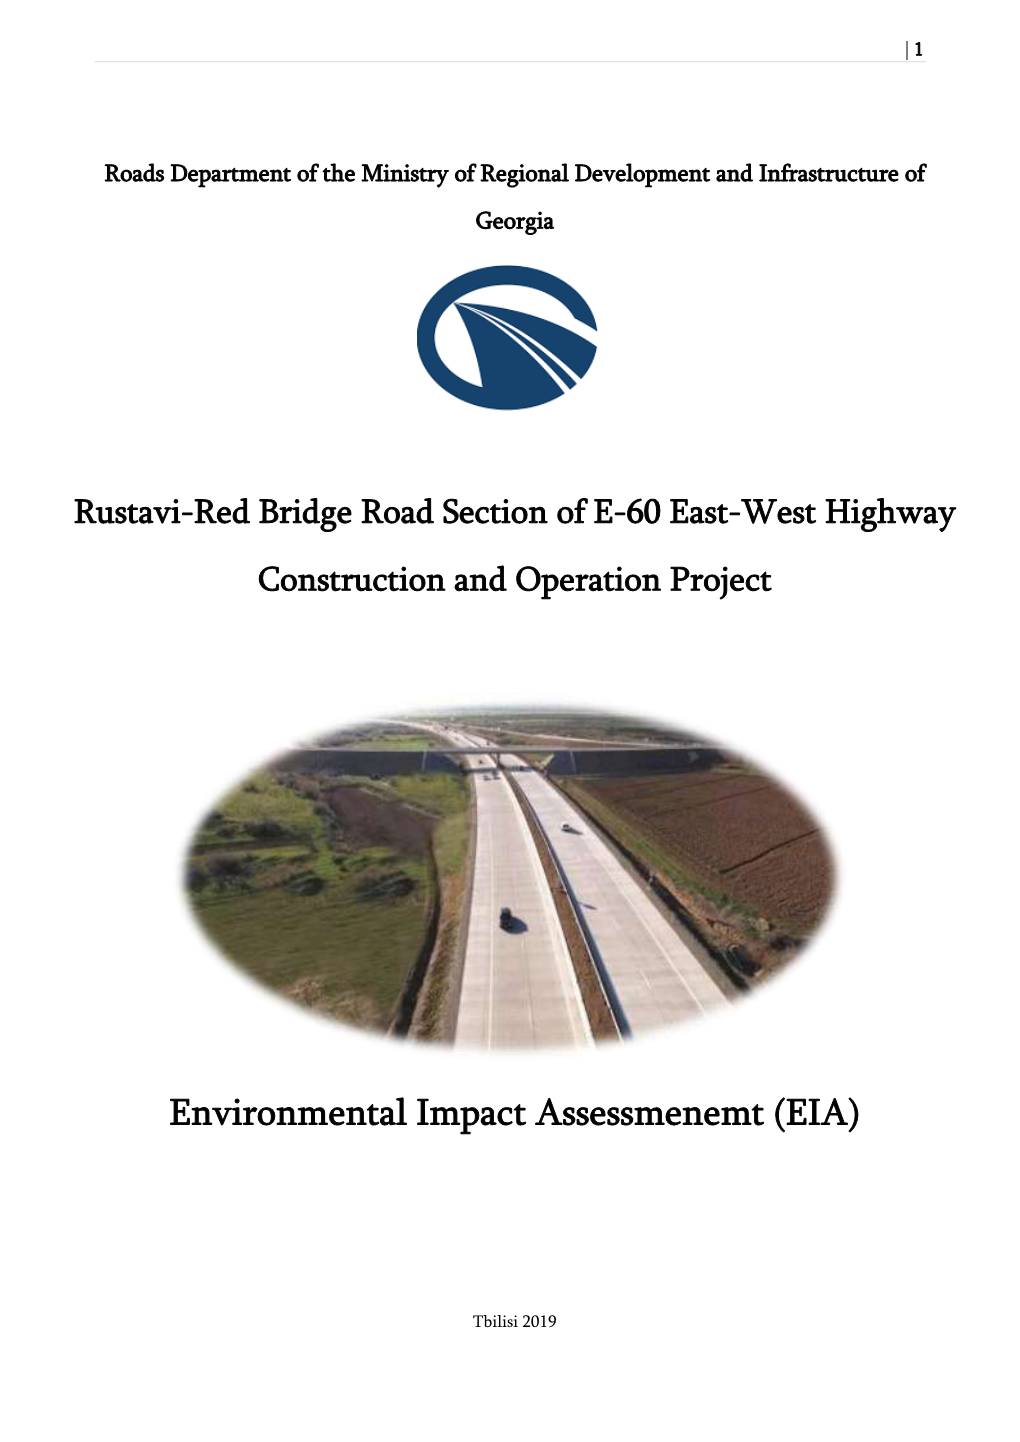 Environmental Impact Assessmenemt (EIA)